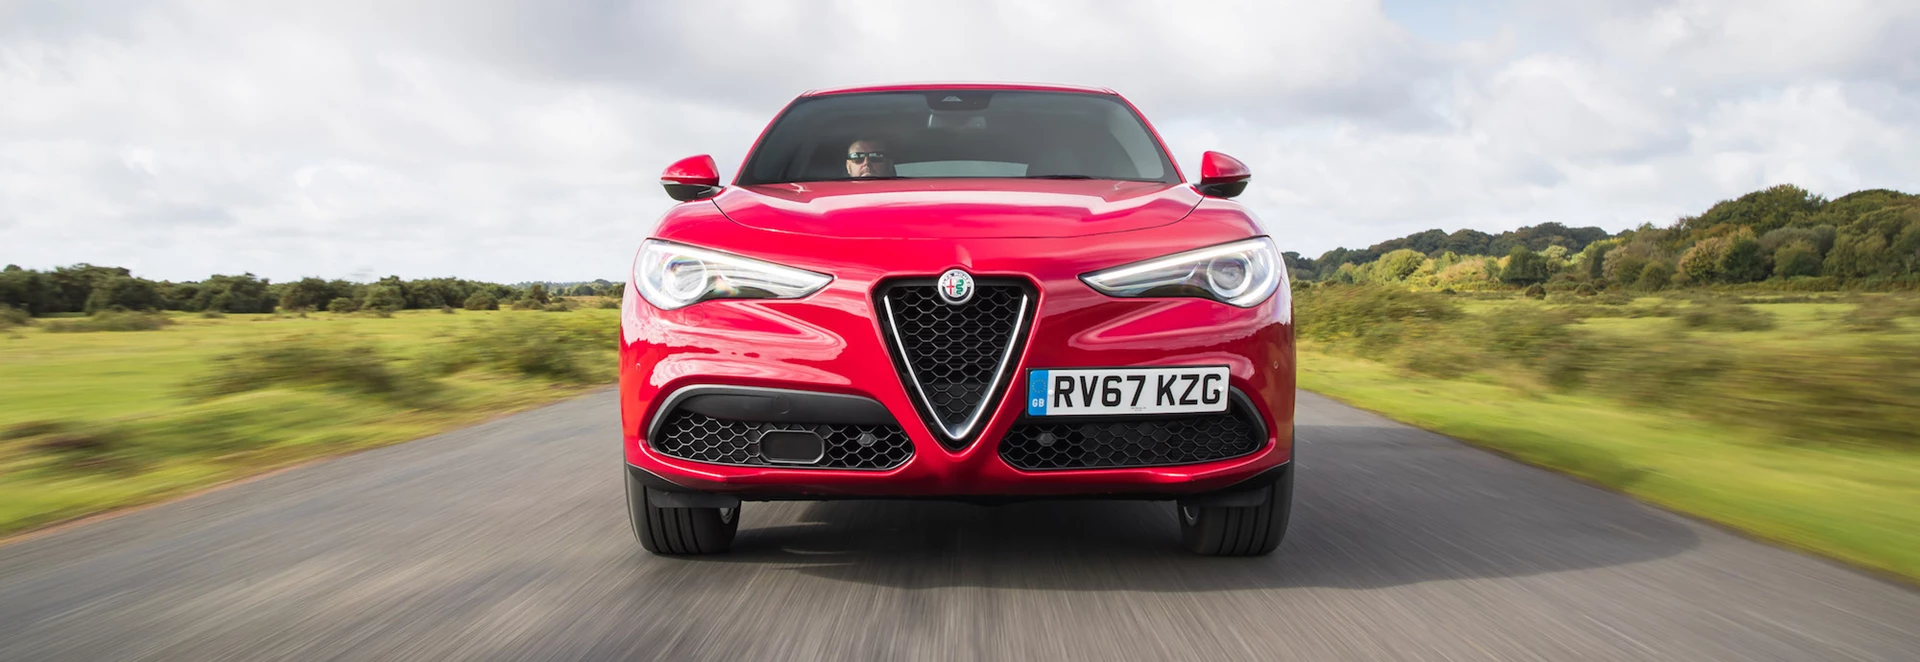 Alfa Romeo teams up with Amazon for Stelvio test drives